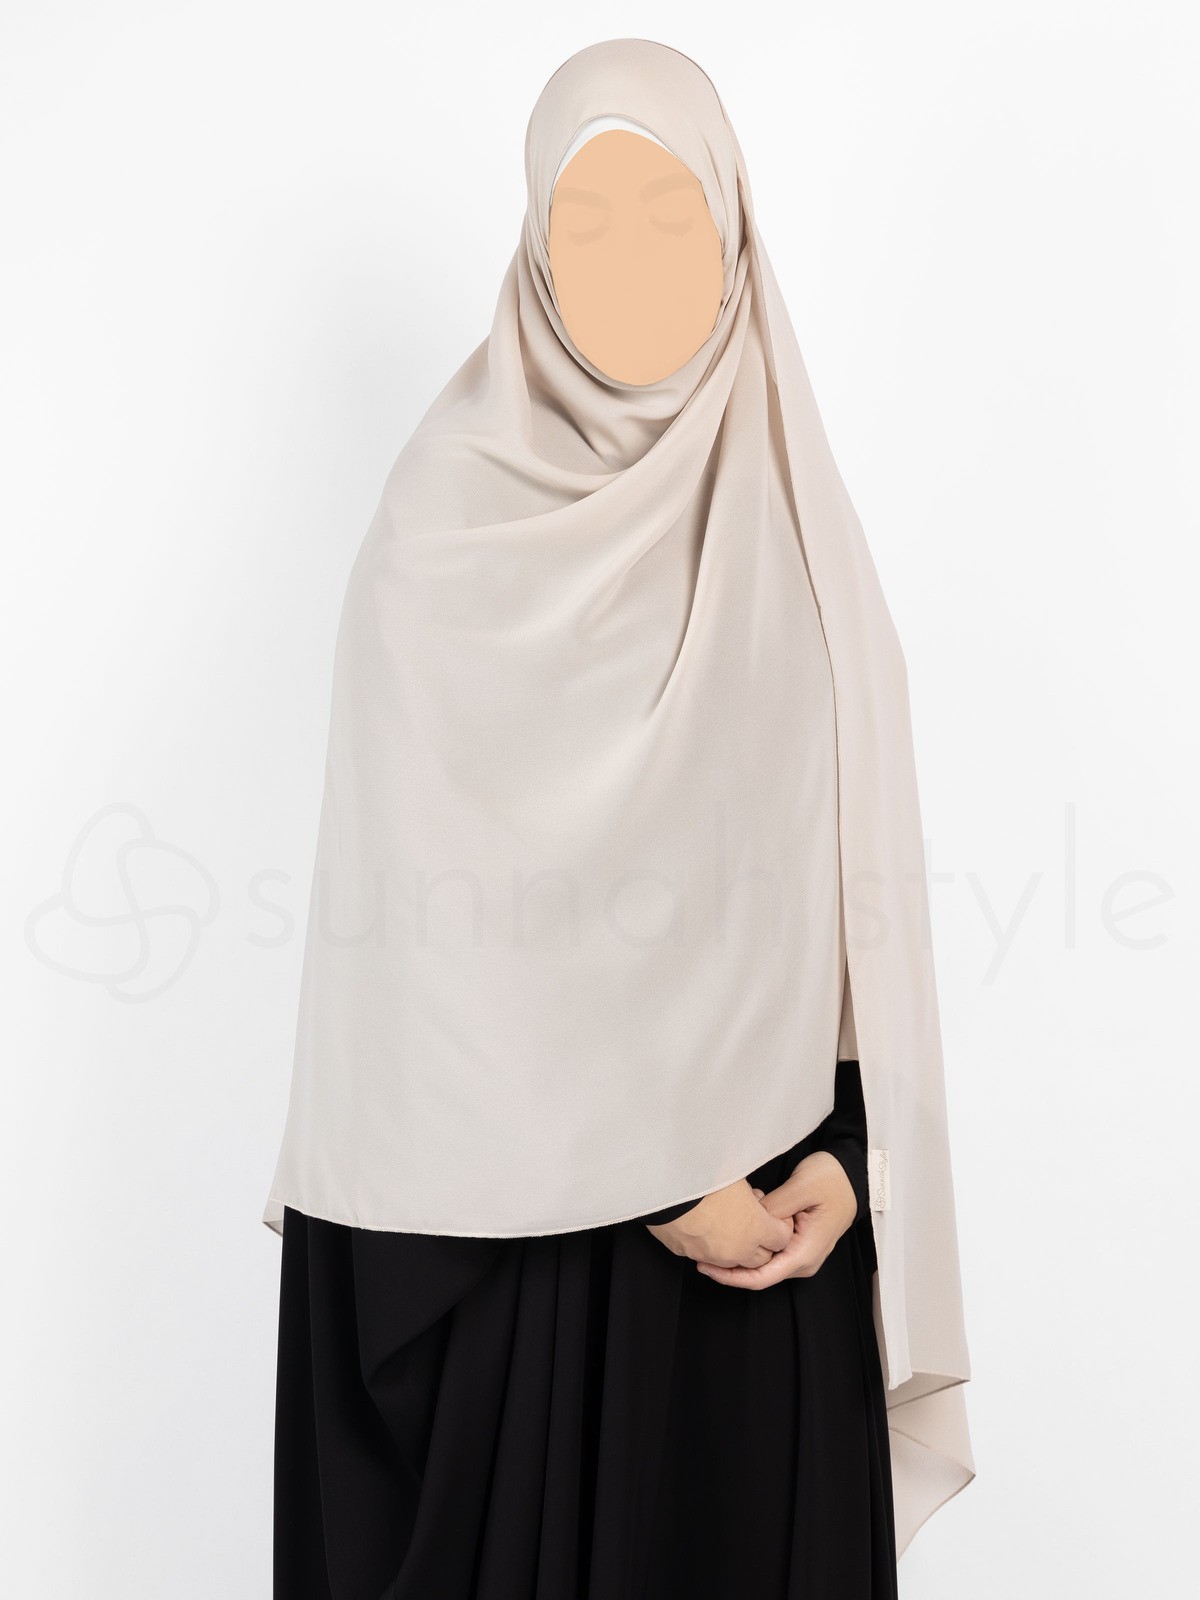 Sunnah Style - Essentials Shayla (Premium Chiffon) - XL (Sahara)